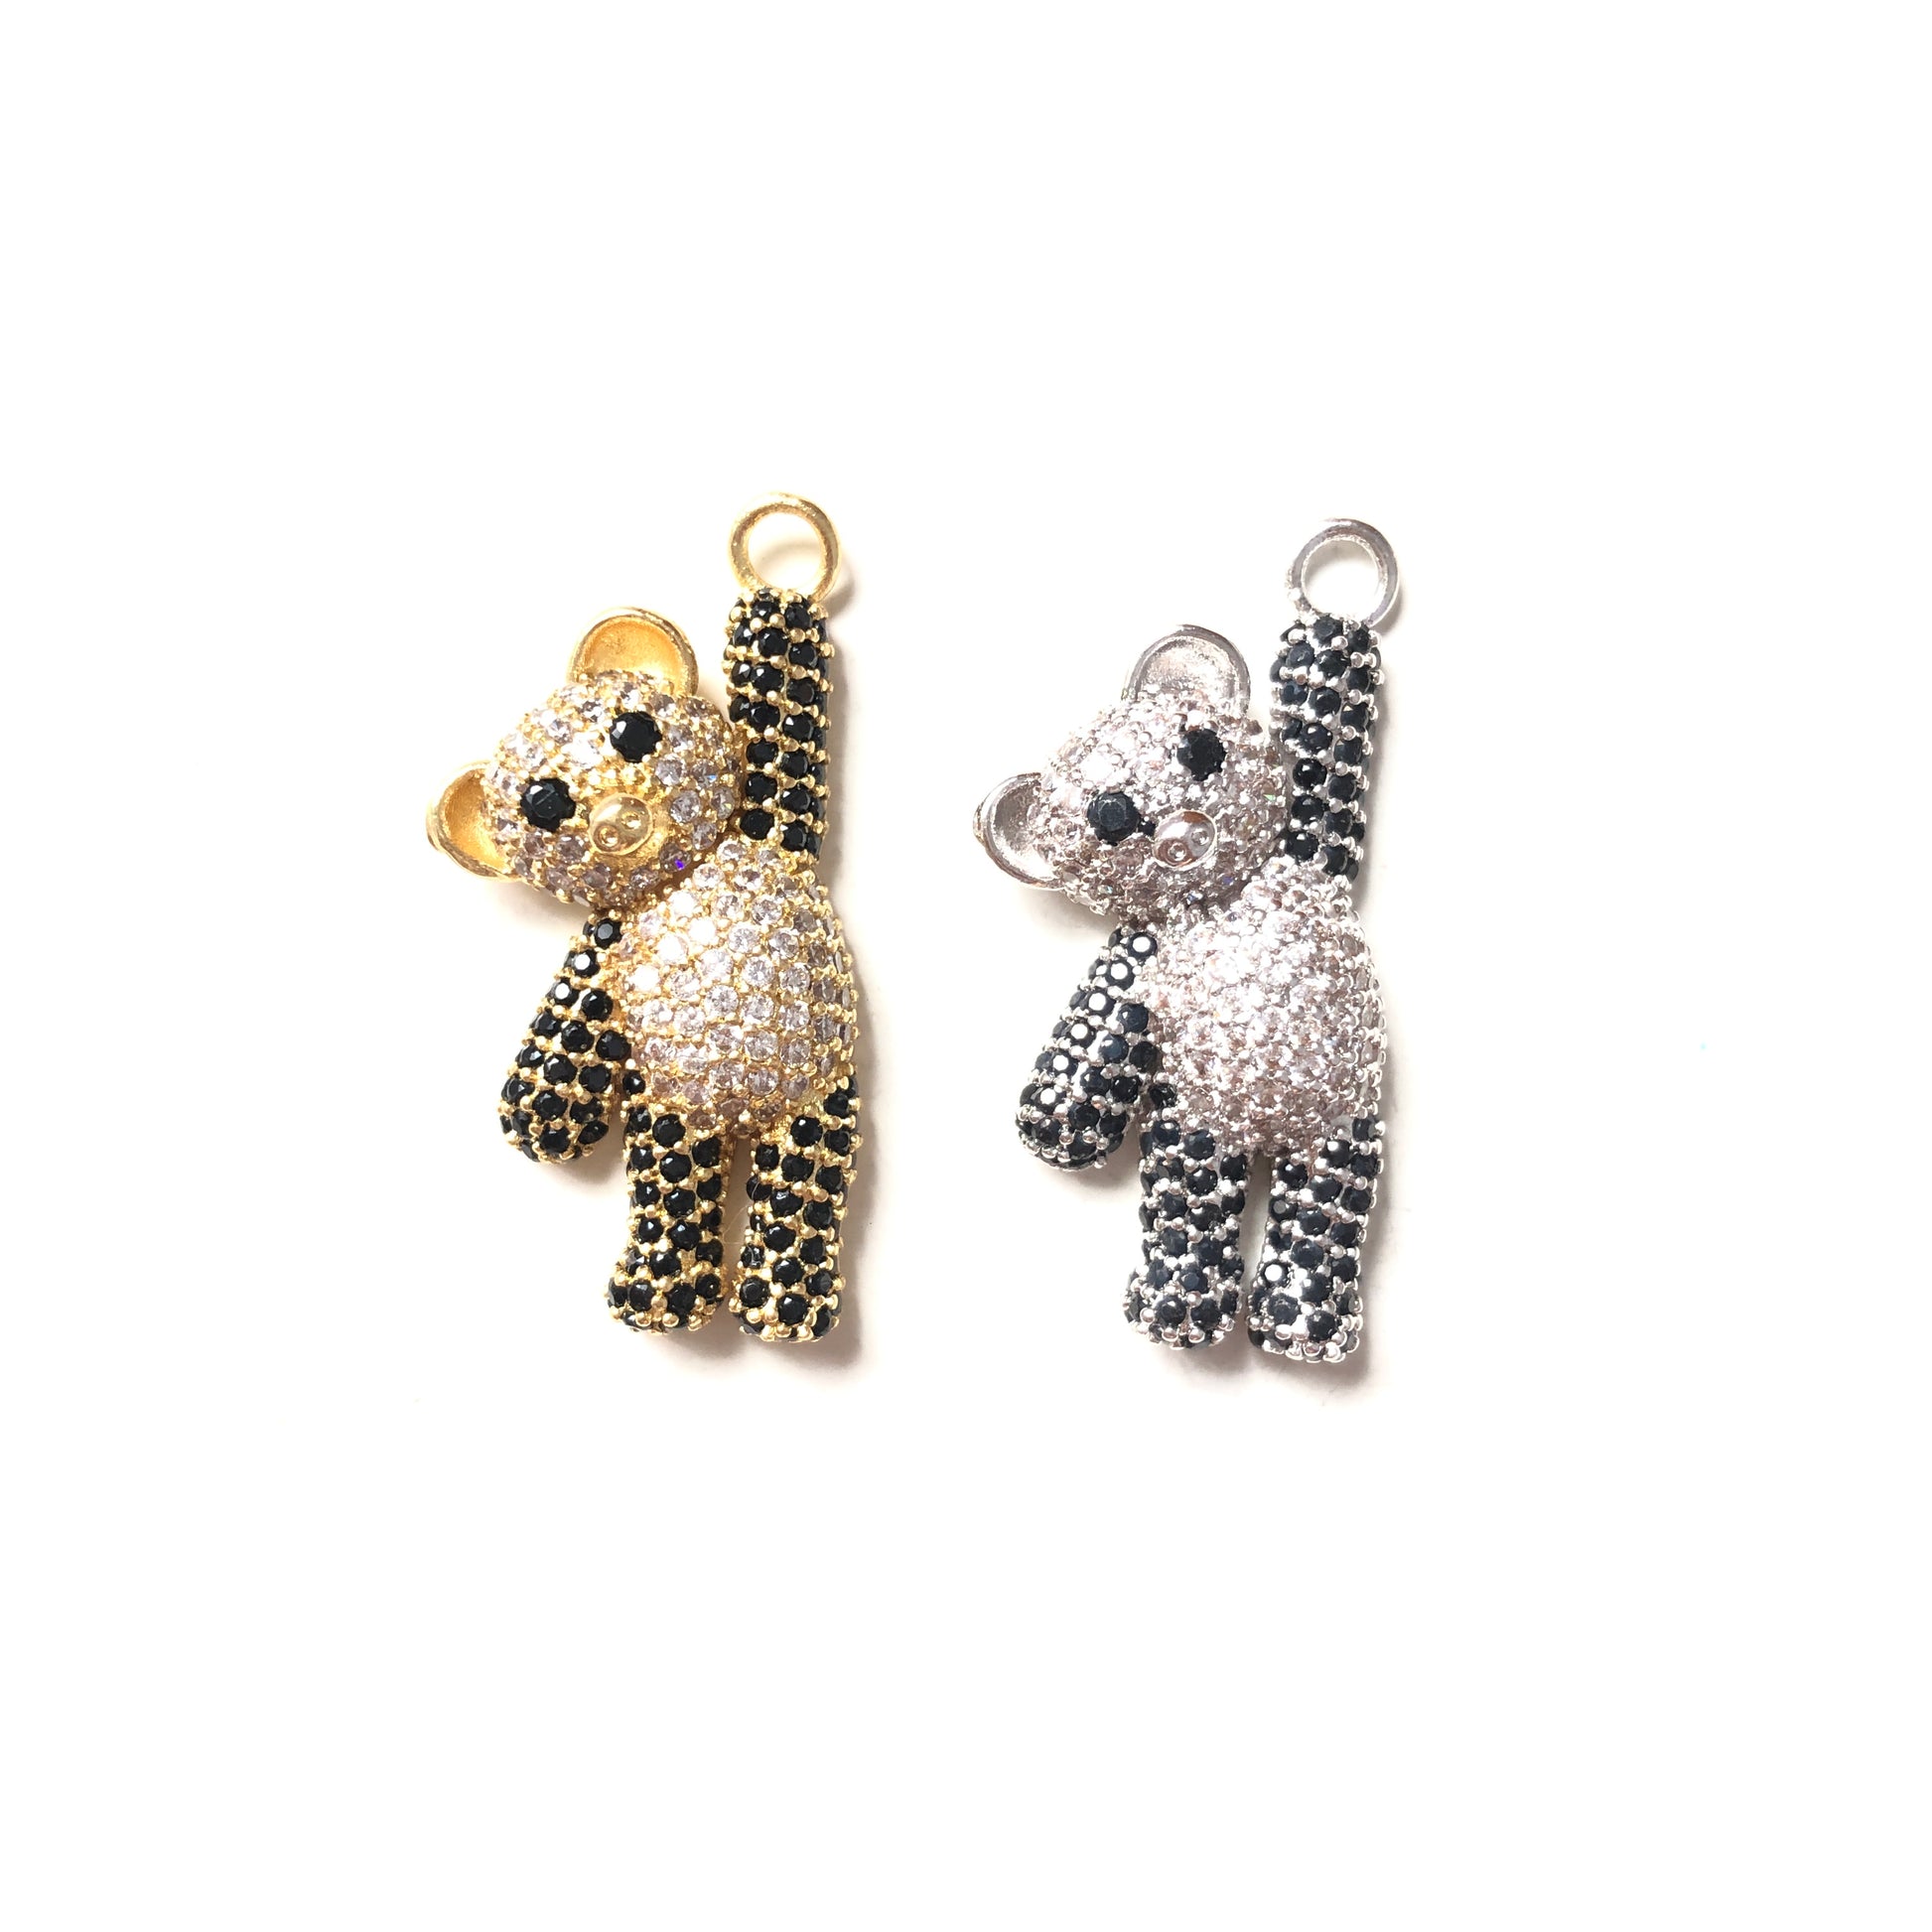 10pcs/lot CZ Paved Cute Baby Bear Charms Mix Big Bear-10pcs CZ Paved Charms Animals & Insects Charms Beads Beyond